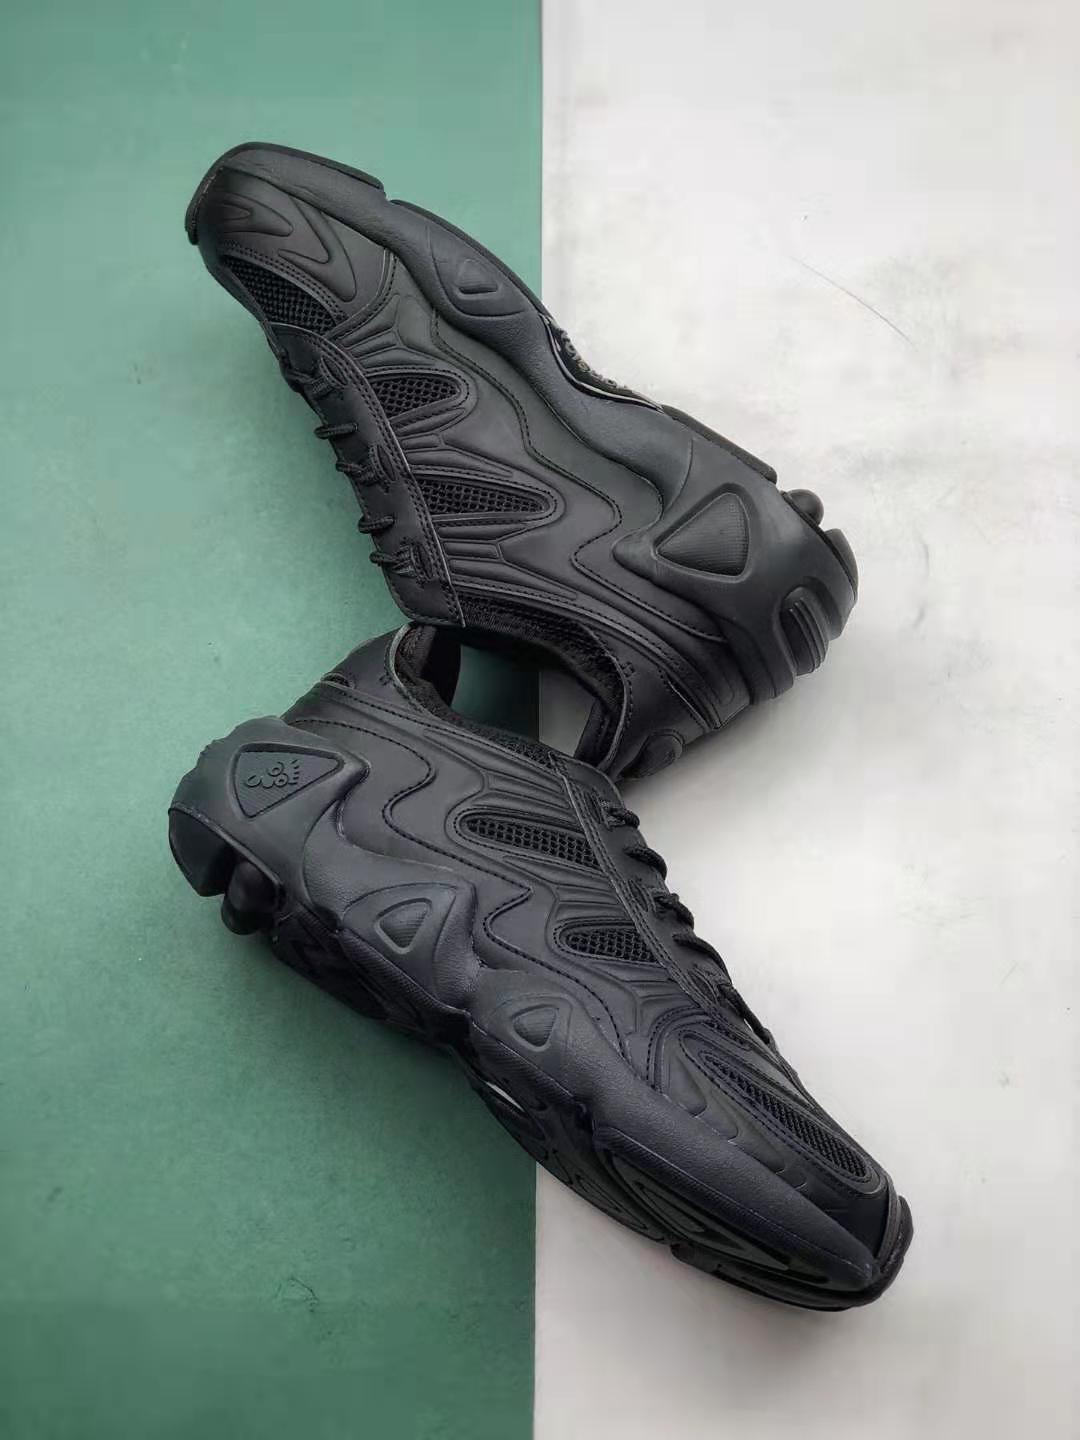 Adidas Originals FYW S-97 Triple Black EE5309 - Stylish Footwear for a Sleek Look